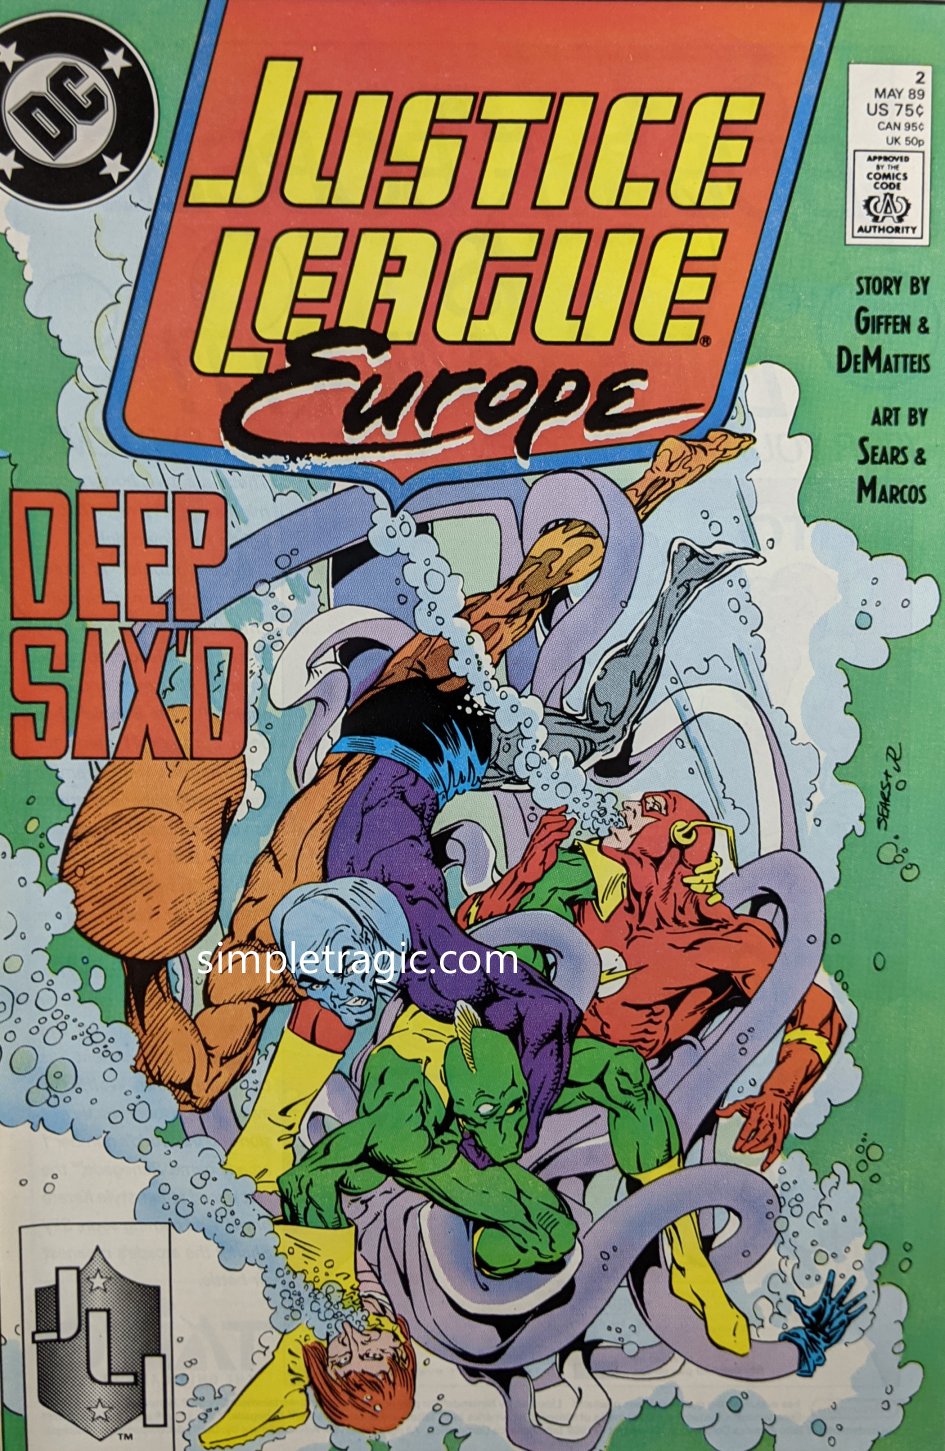 Justice League Europe #2 Comic Book Cover Art